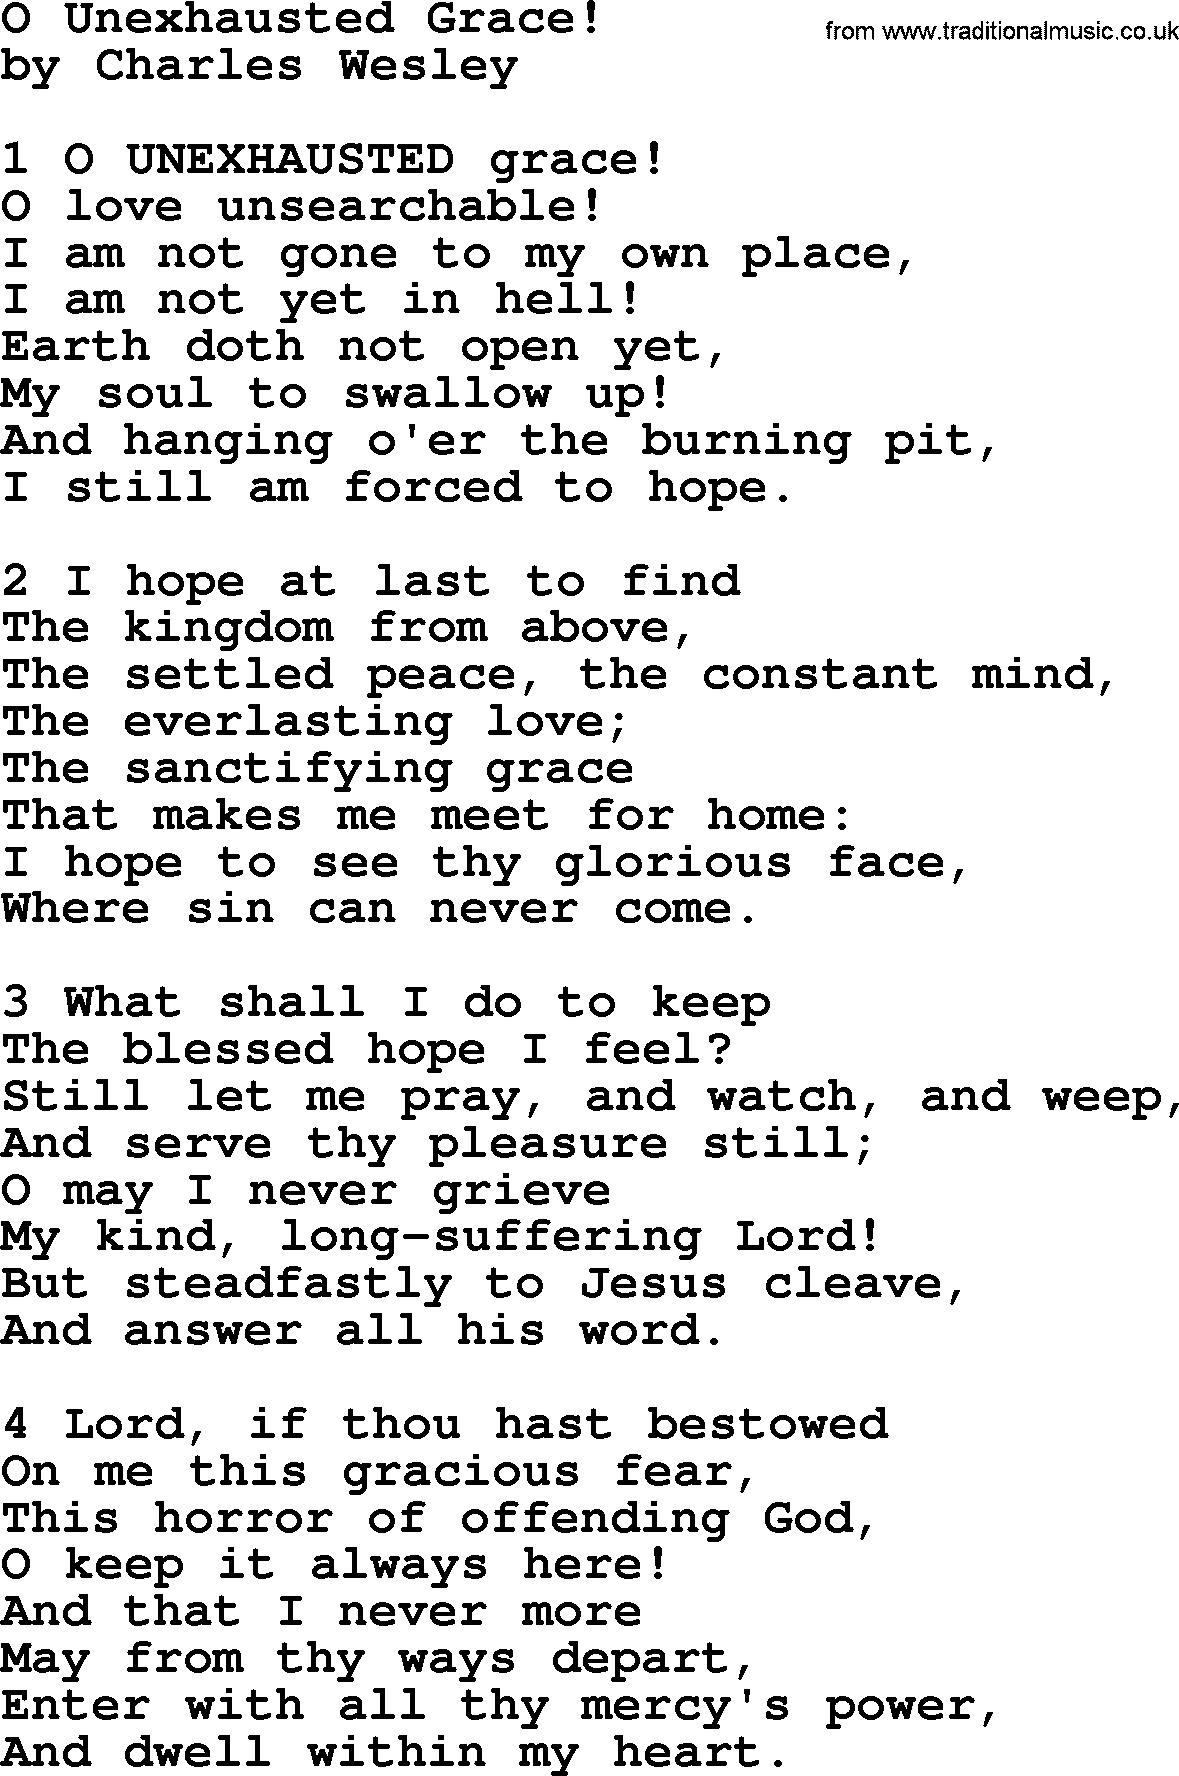 Charles Wesley hymn: O Unexhausted Grace!, lyrics